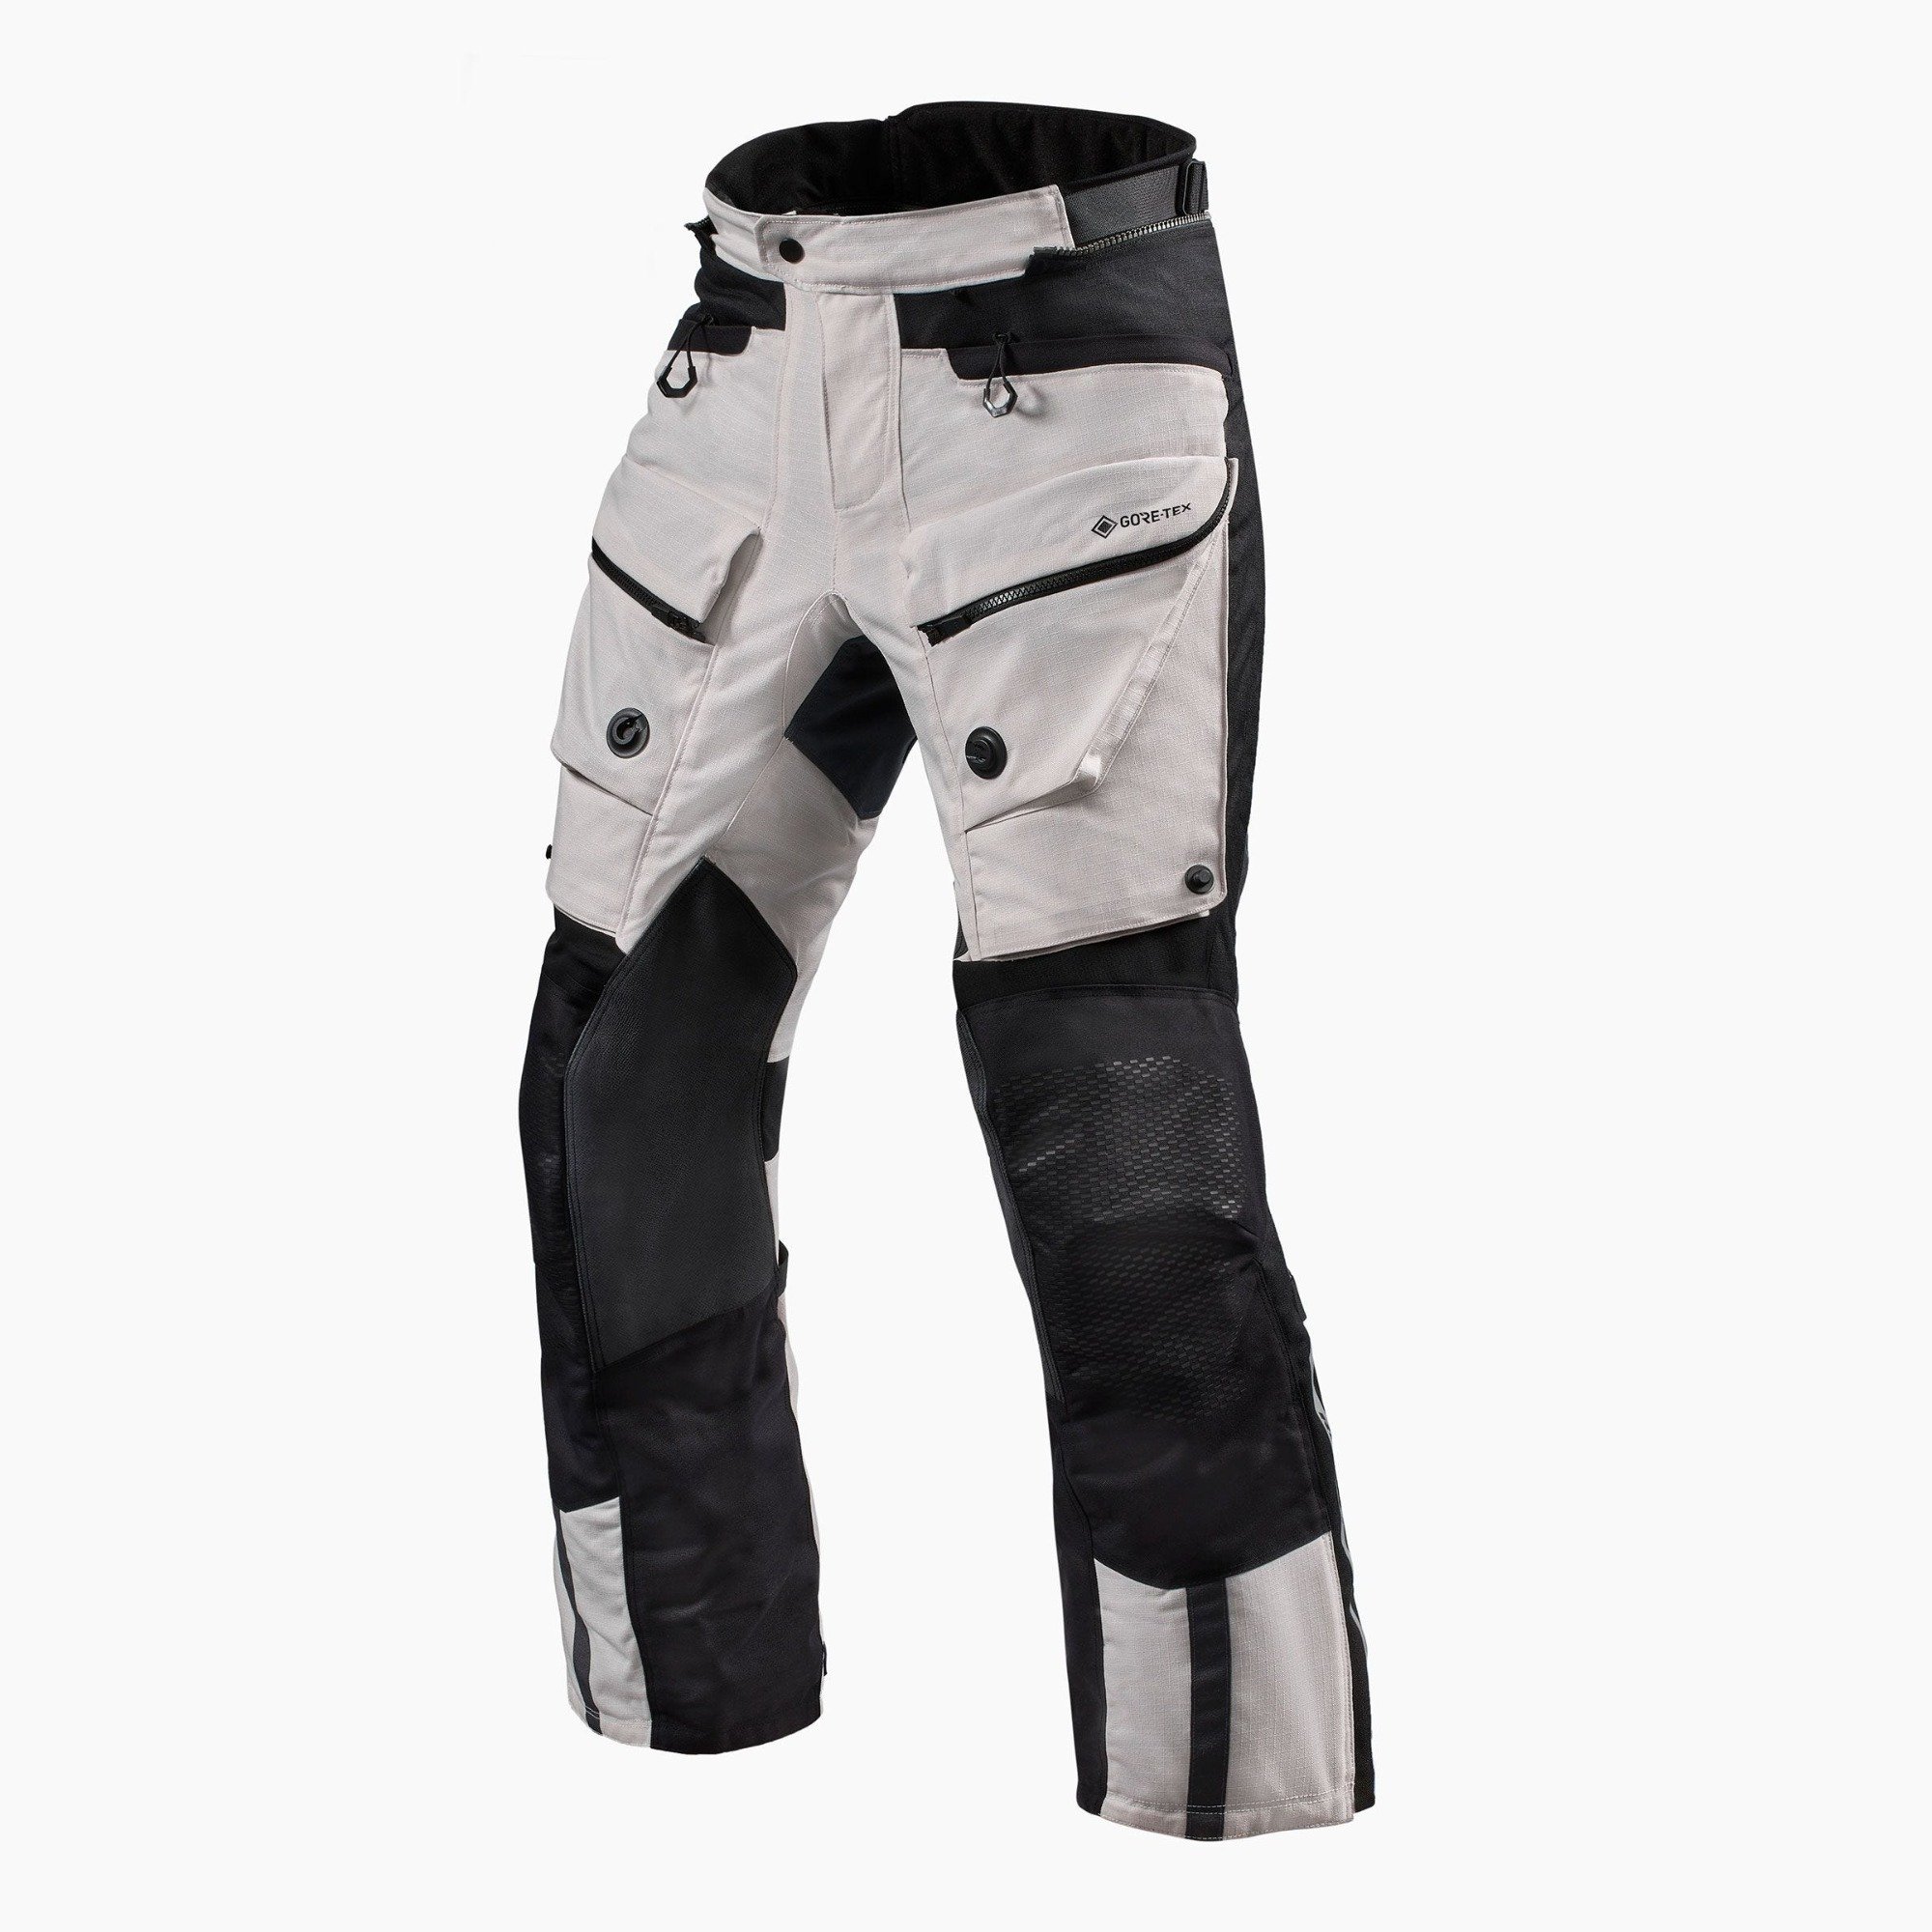 Image of REV'IT! Trousers Defender 3 GTX Silver Black Standard Motorcycle Pants Size 2XL EN